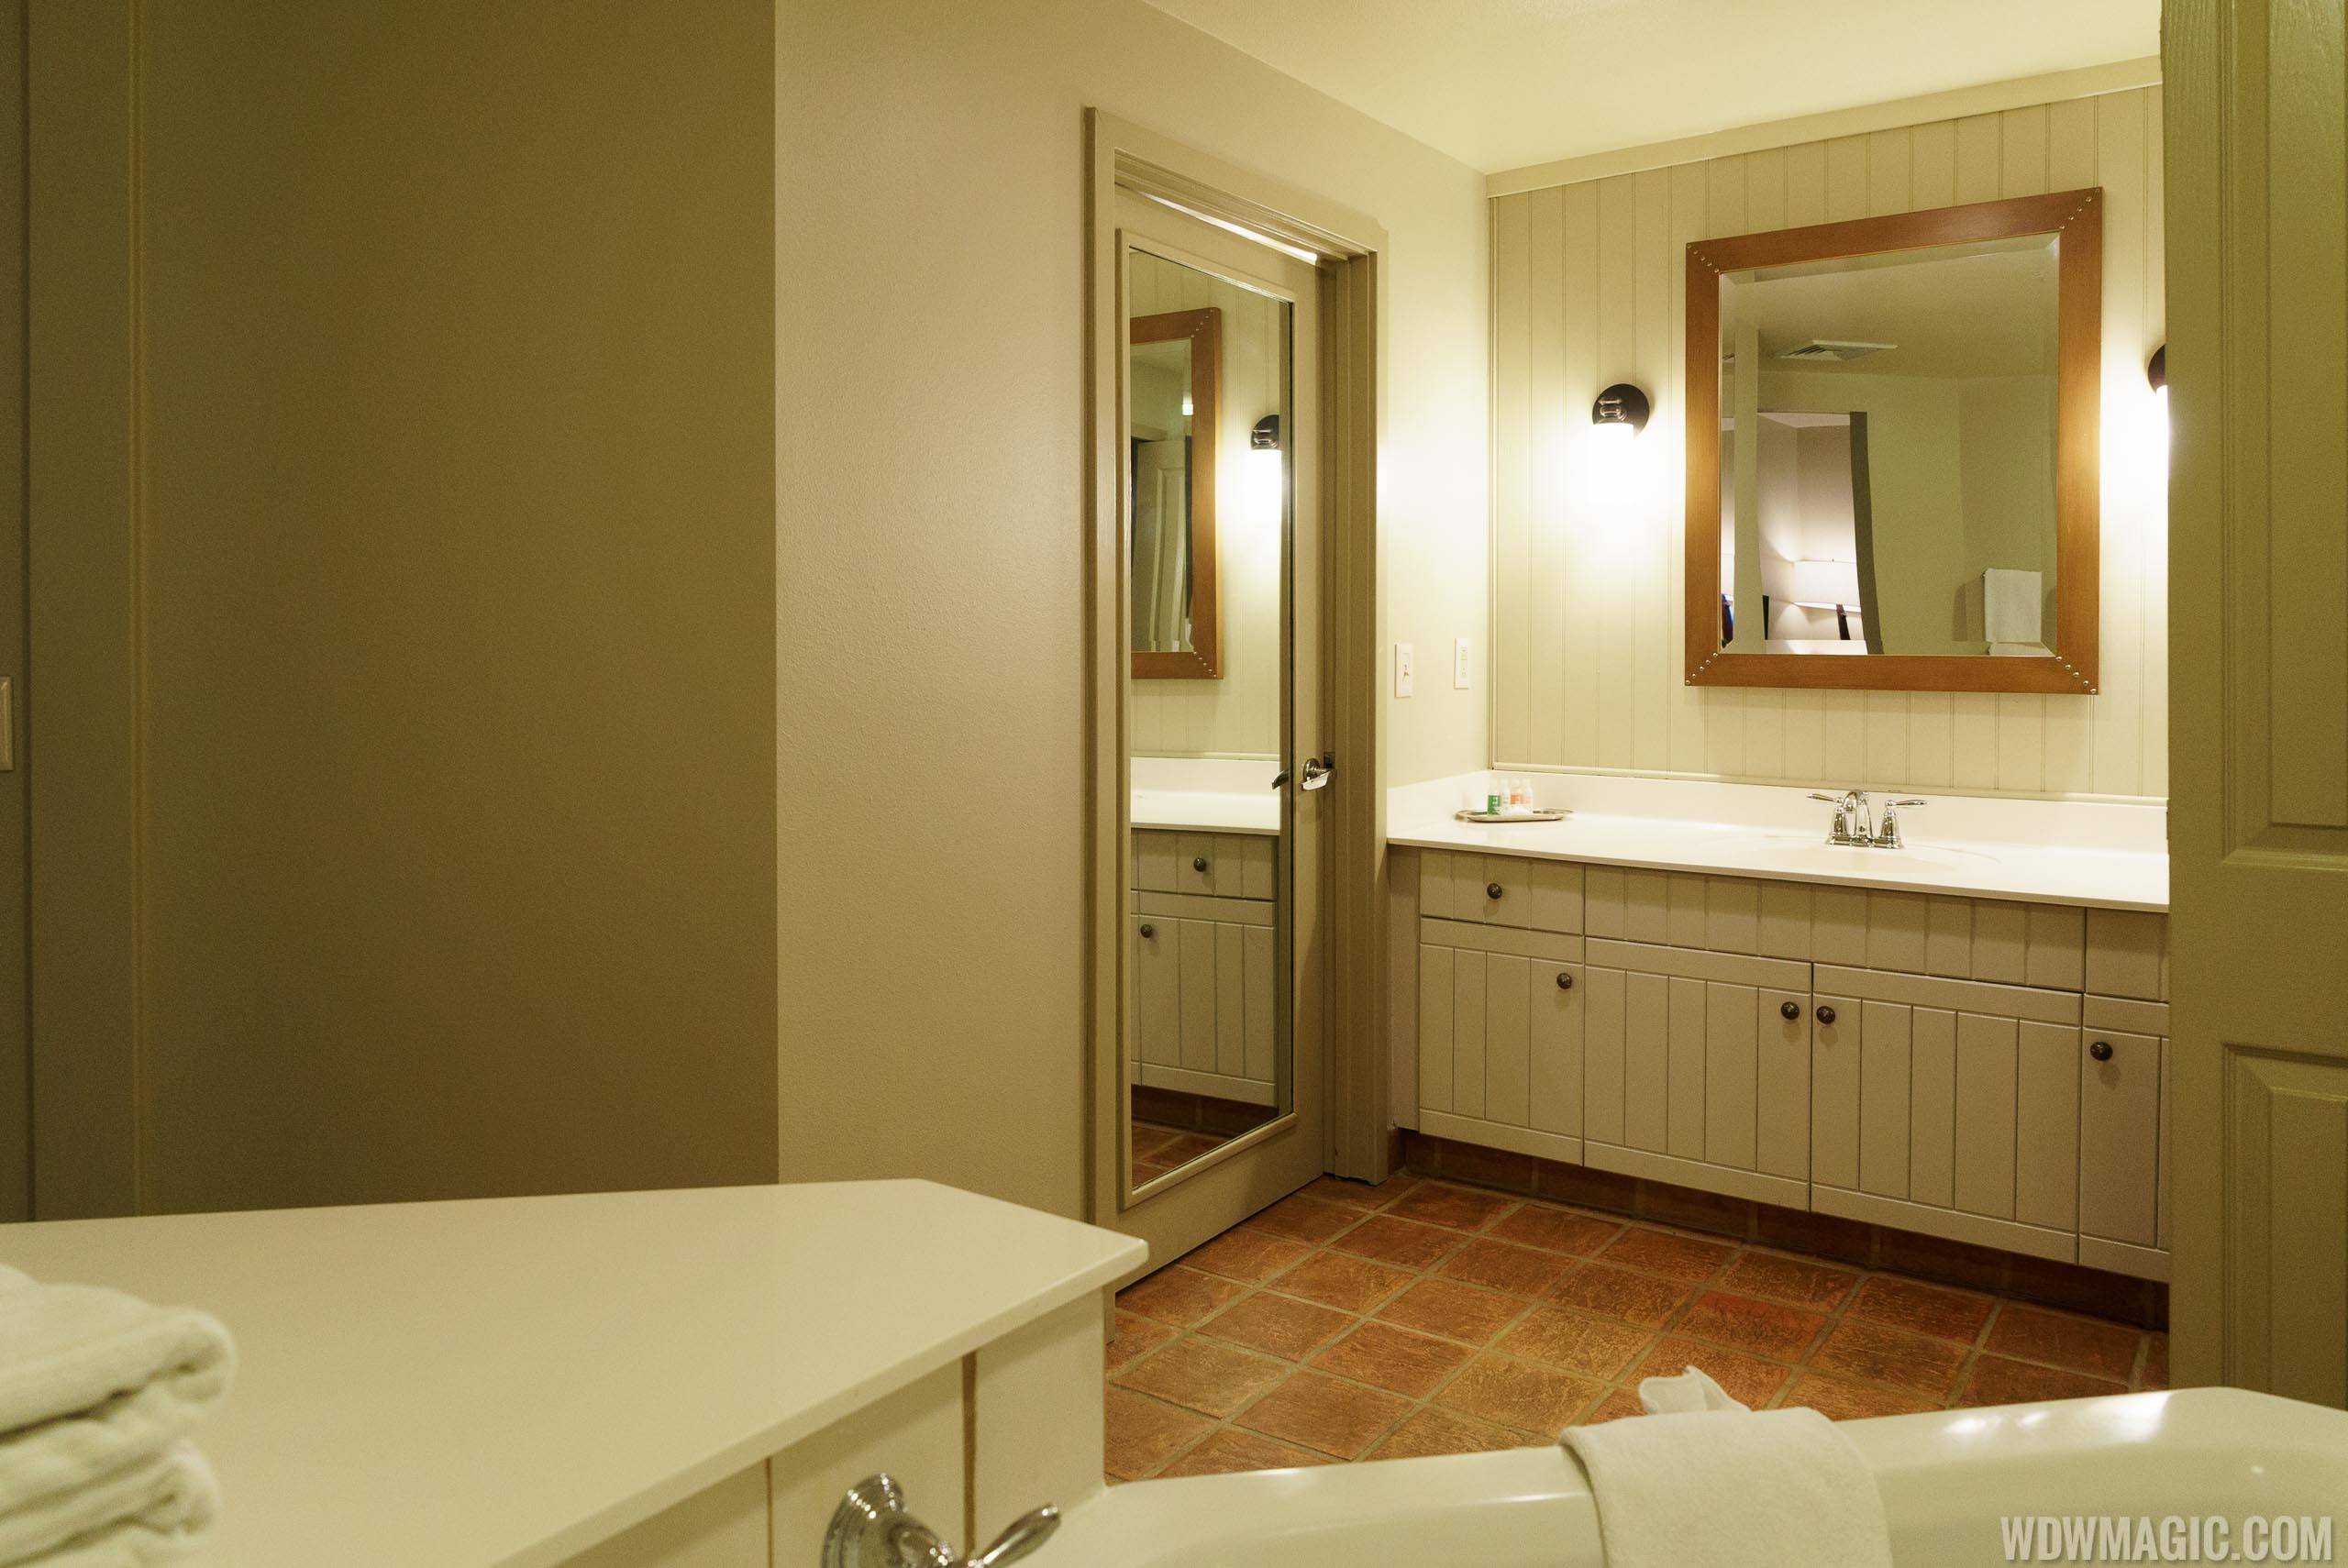 Disney's Hilton Head Island Resort - 2 Bedroom Suite Master Bathroom